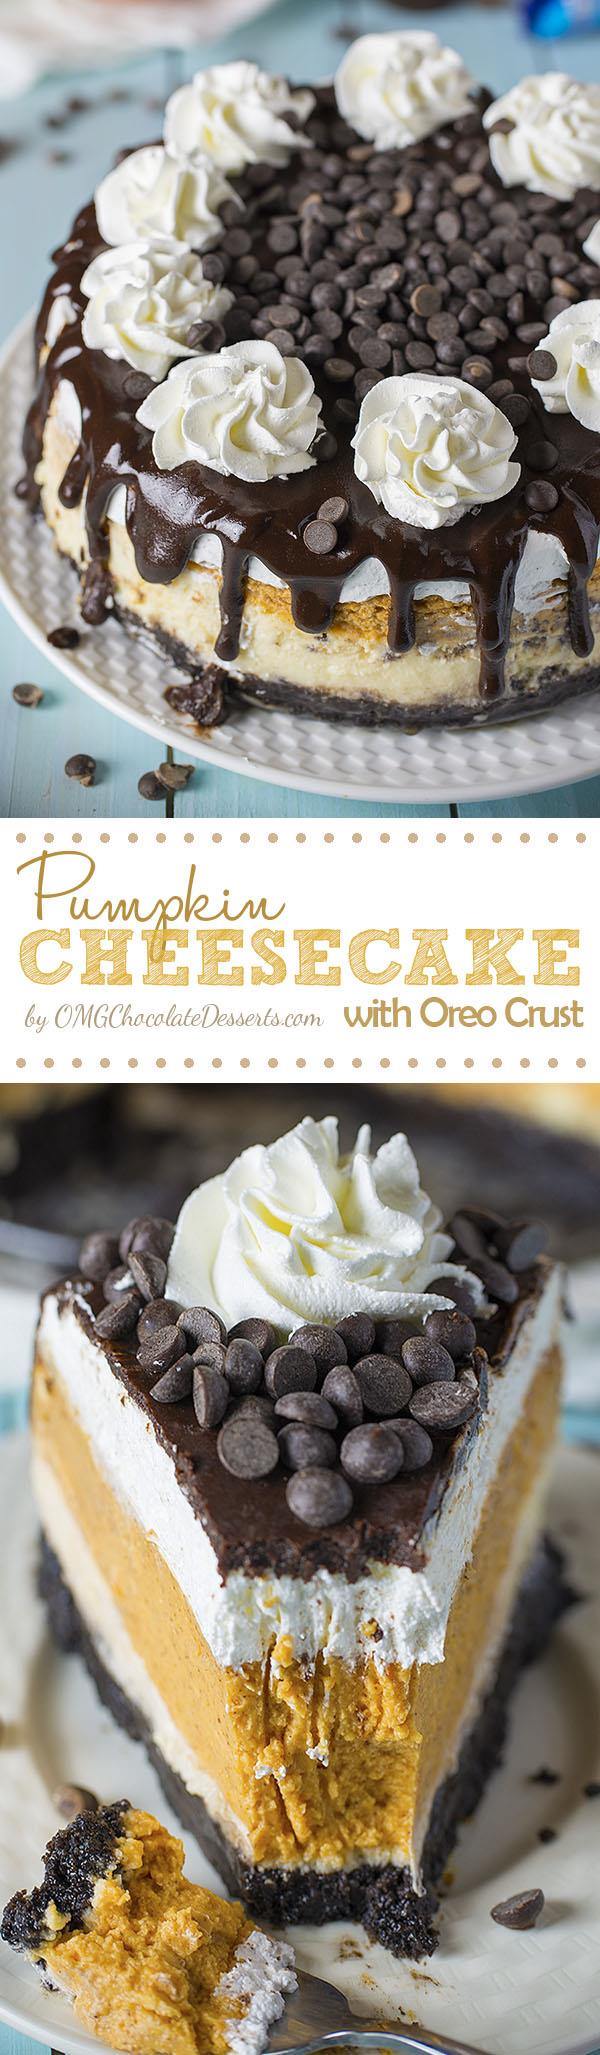 Pumpkin Cheesecake with Oreo Crust | OMG Chocolate Desserts